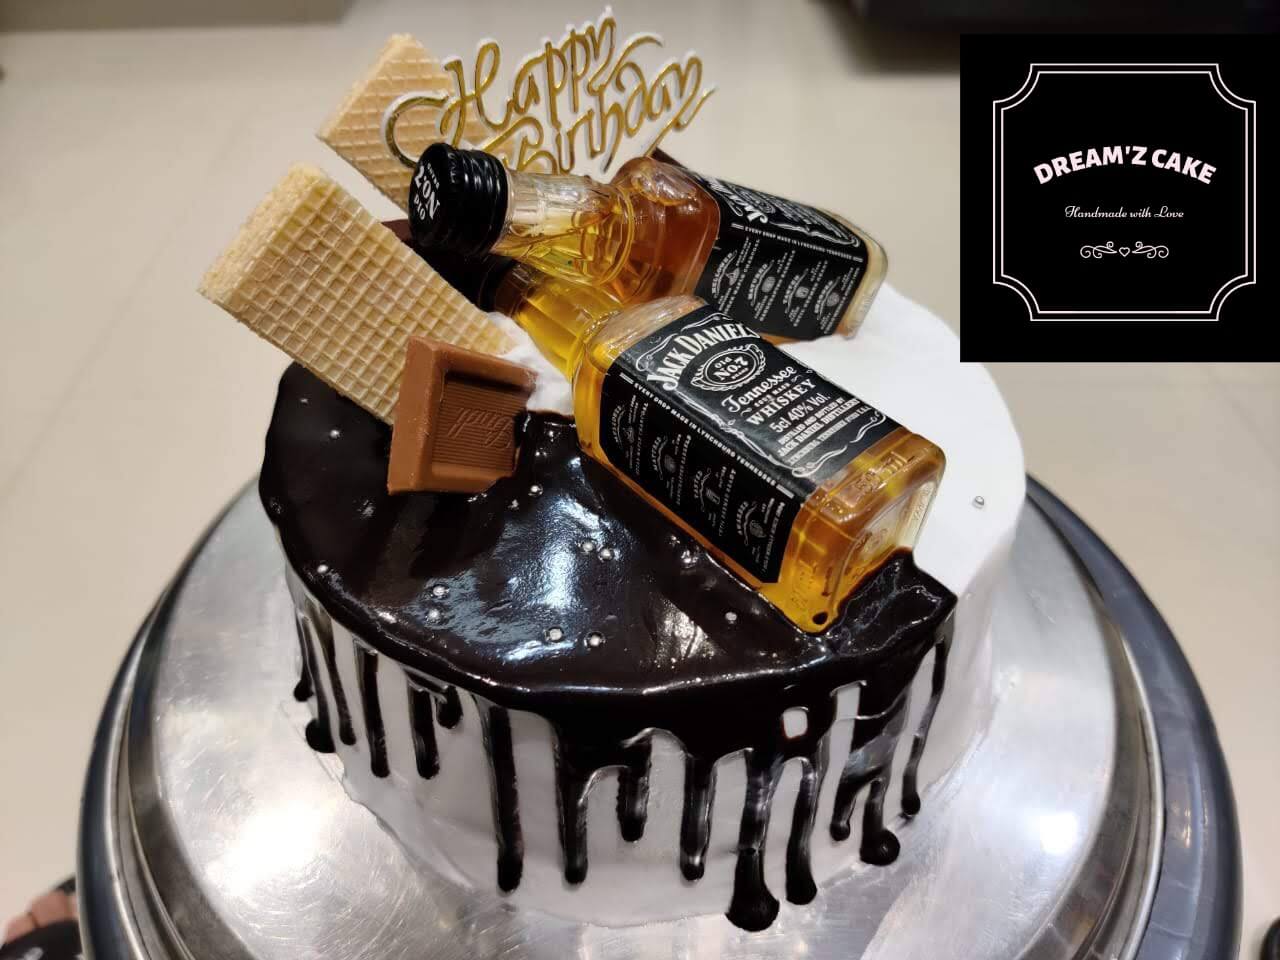 Choco Chip’s Dutch Chocolate Cake with Jack Daniel Designs, Images, Price Near Me